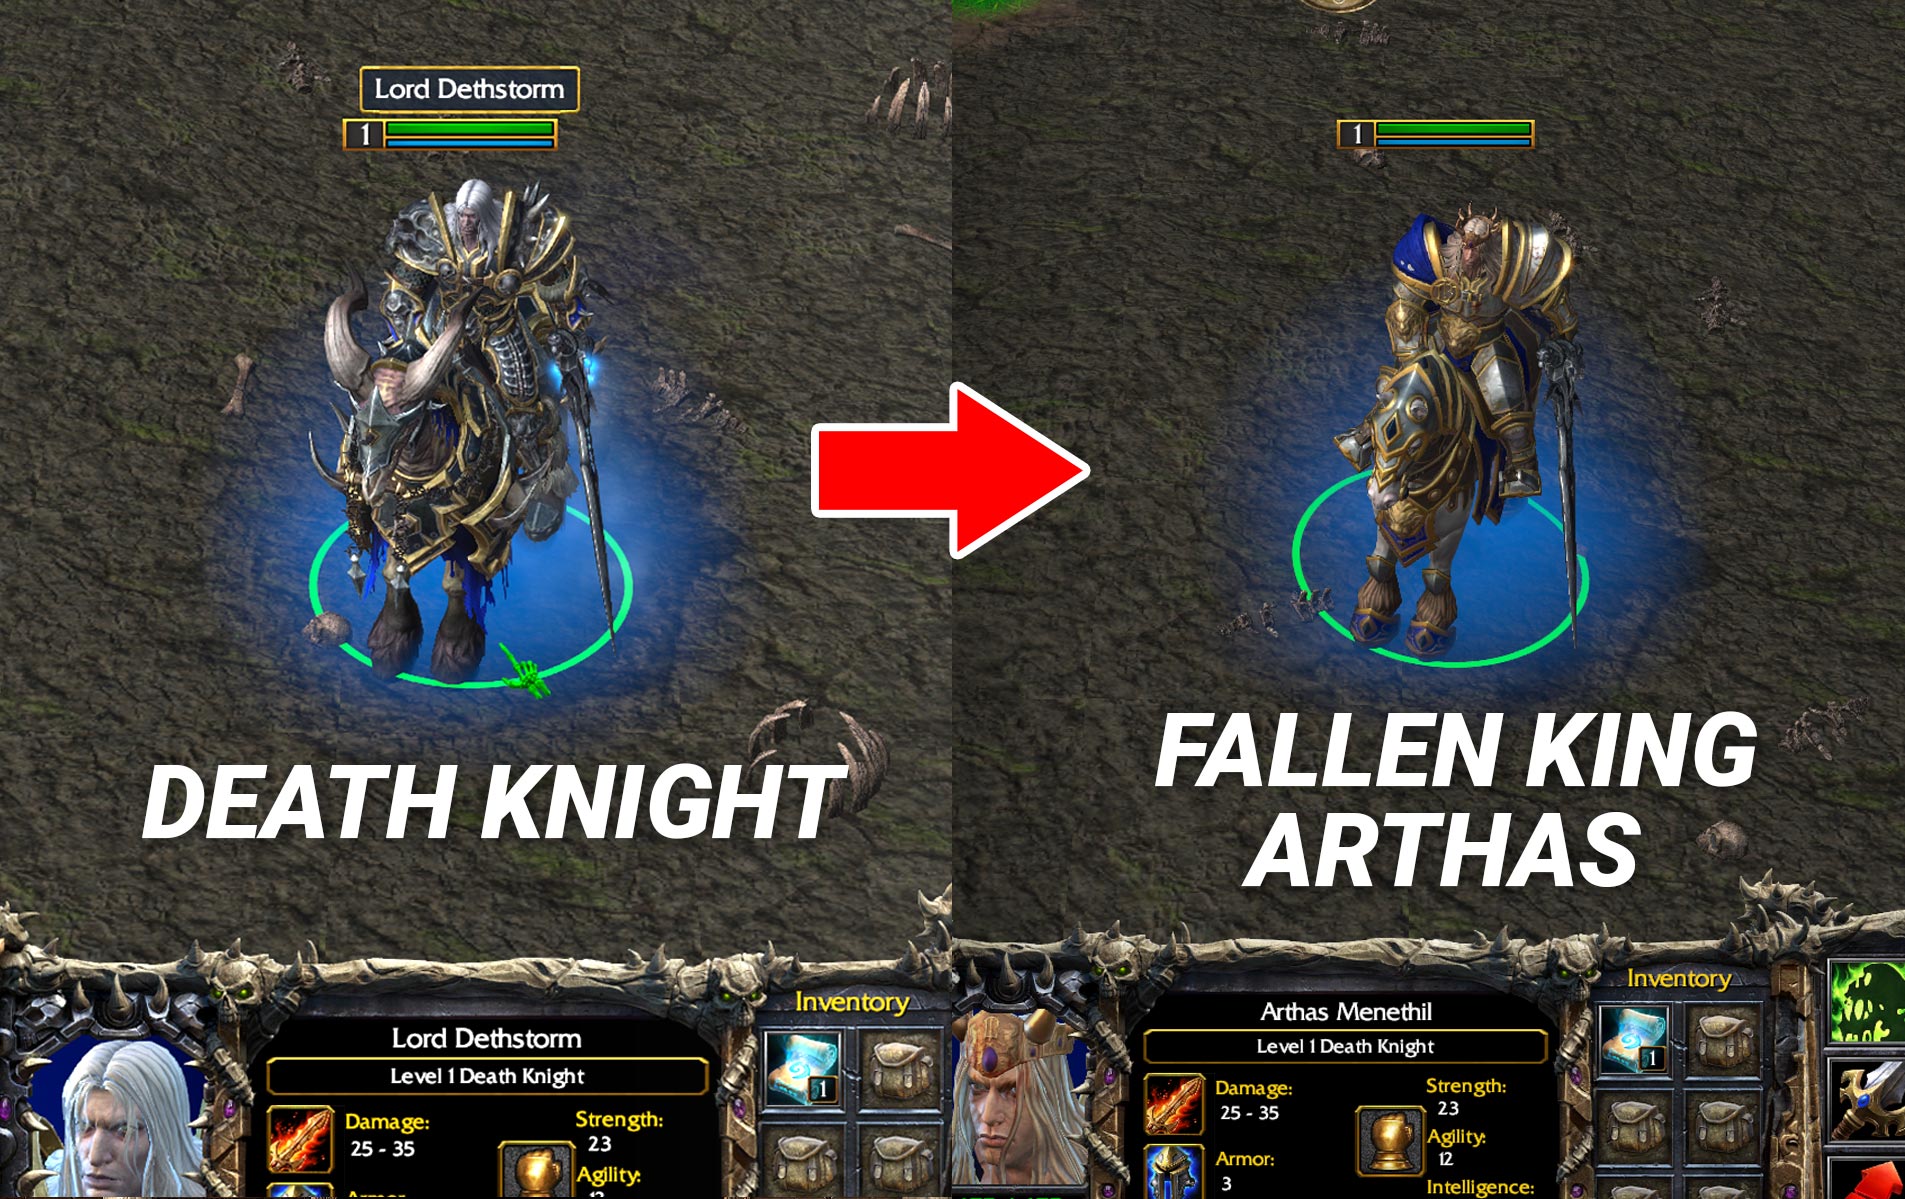 Warcraft 3 Deathknight vs Fallen King Arthas